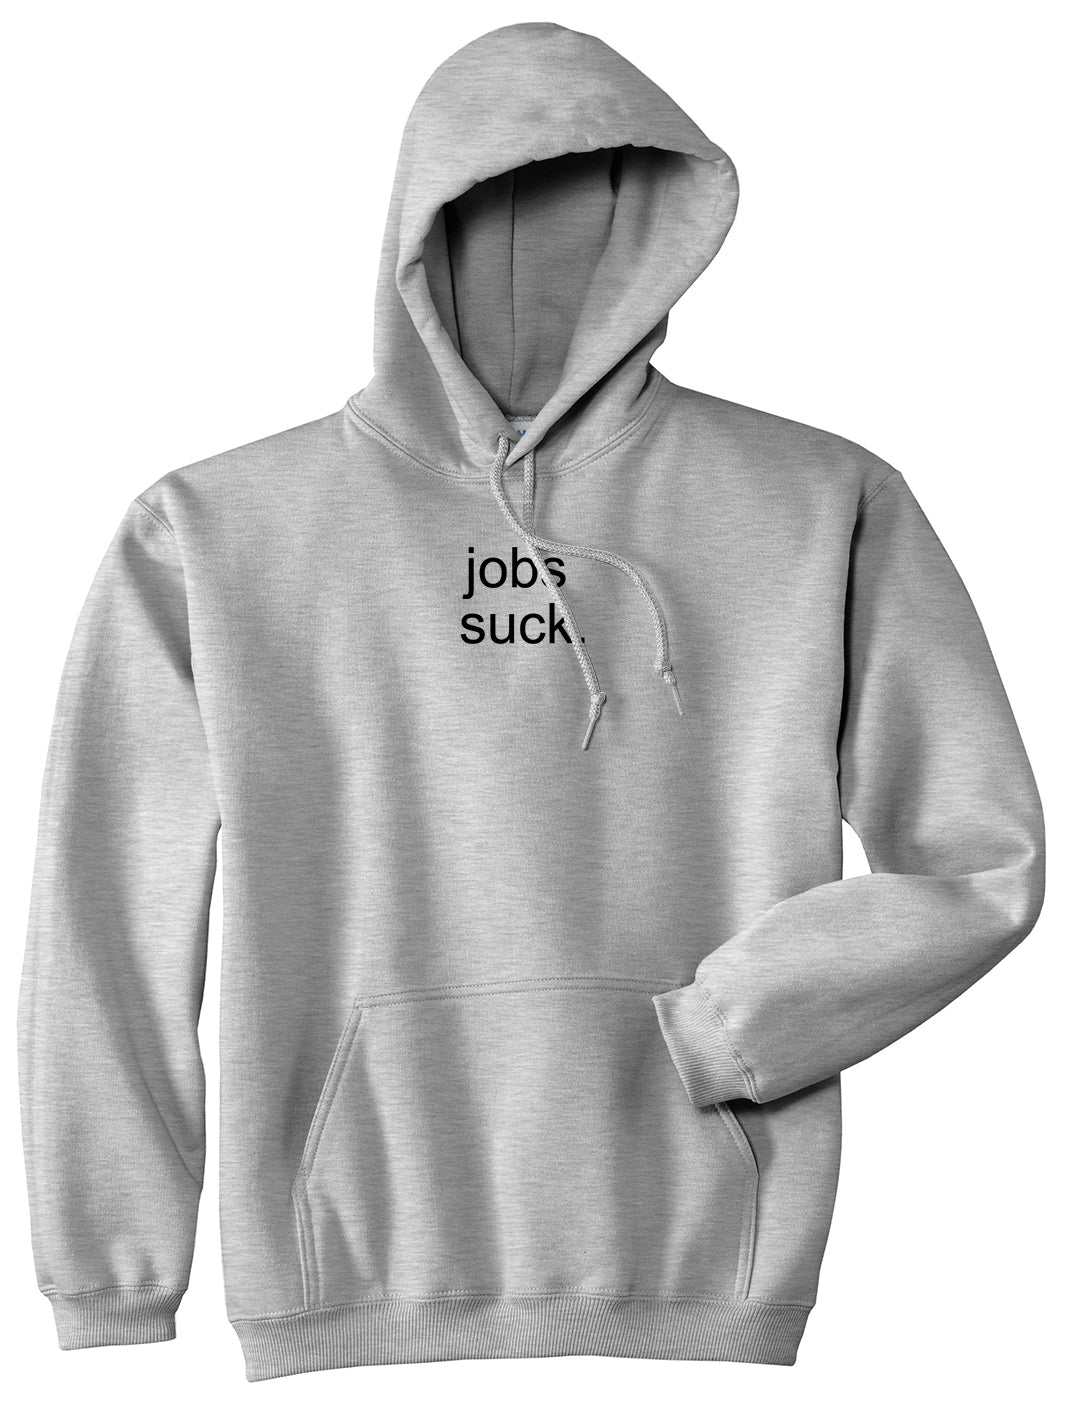 Jobs Suck Pullover Hoodie in Grey